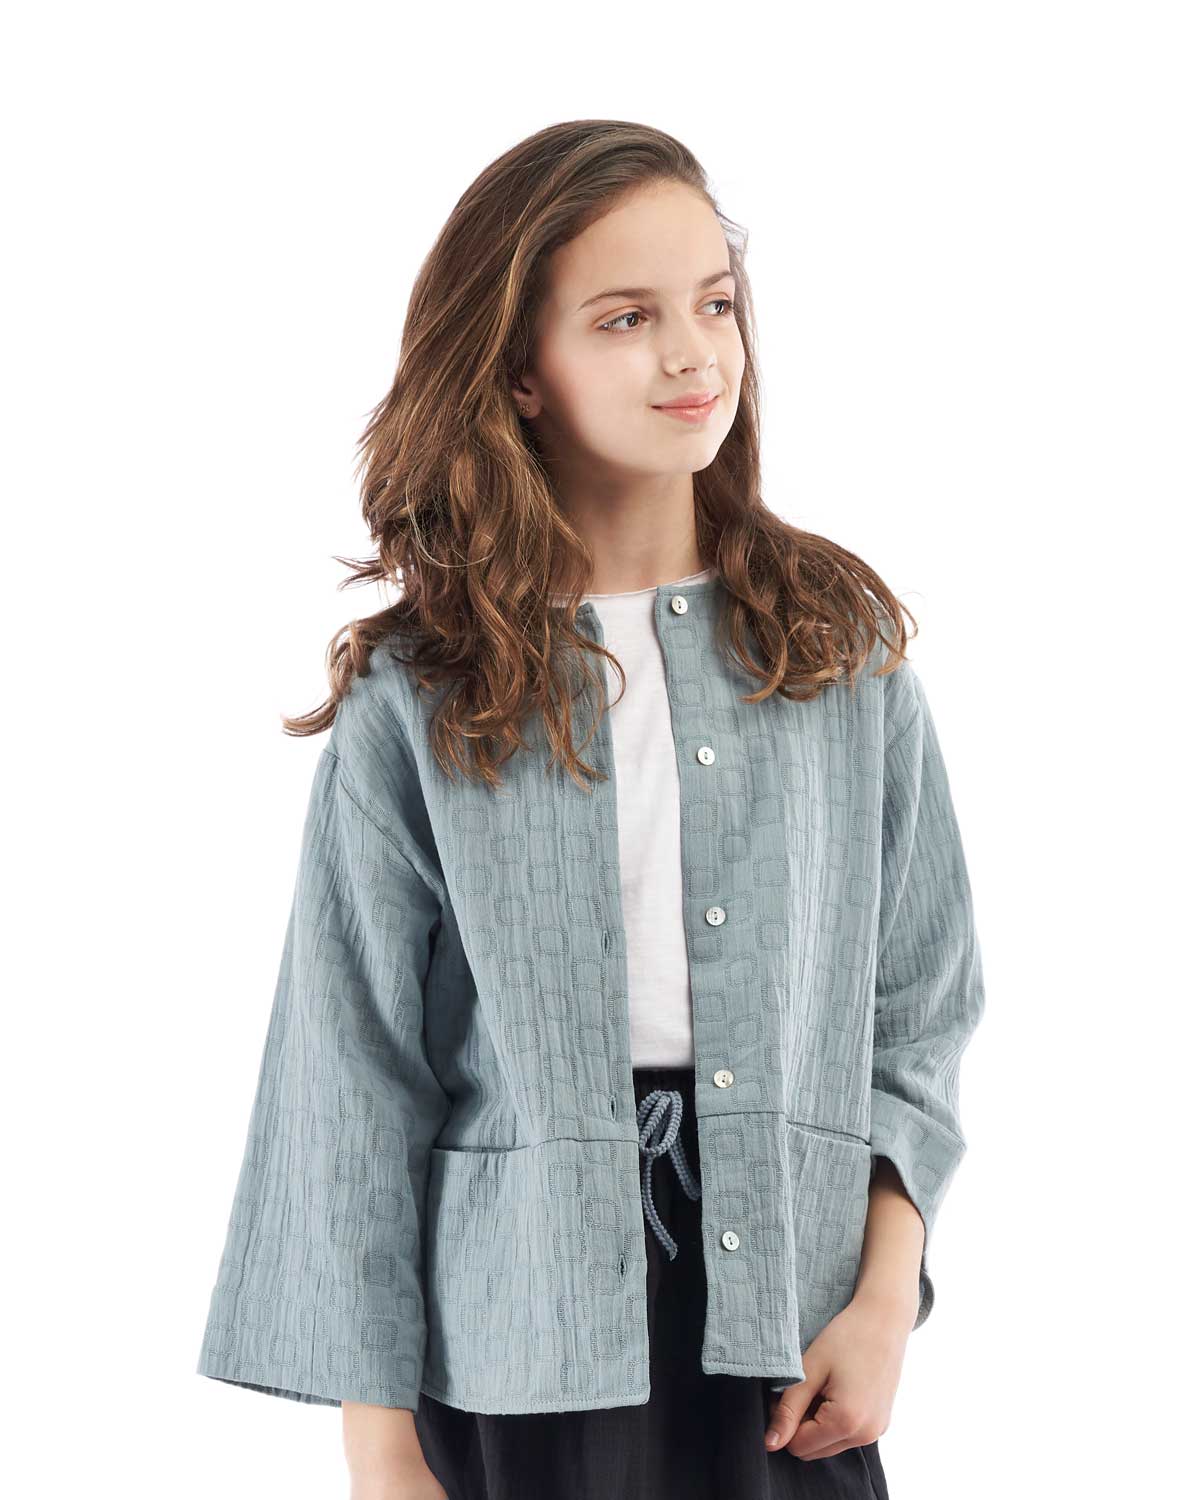 Blusa de niña Mishti en color azul de manga larga abierta en el frente